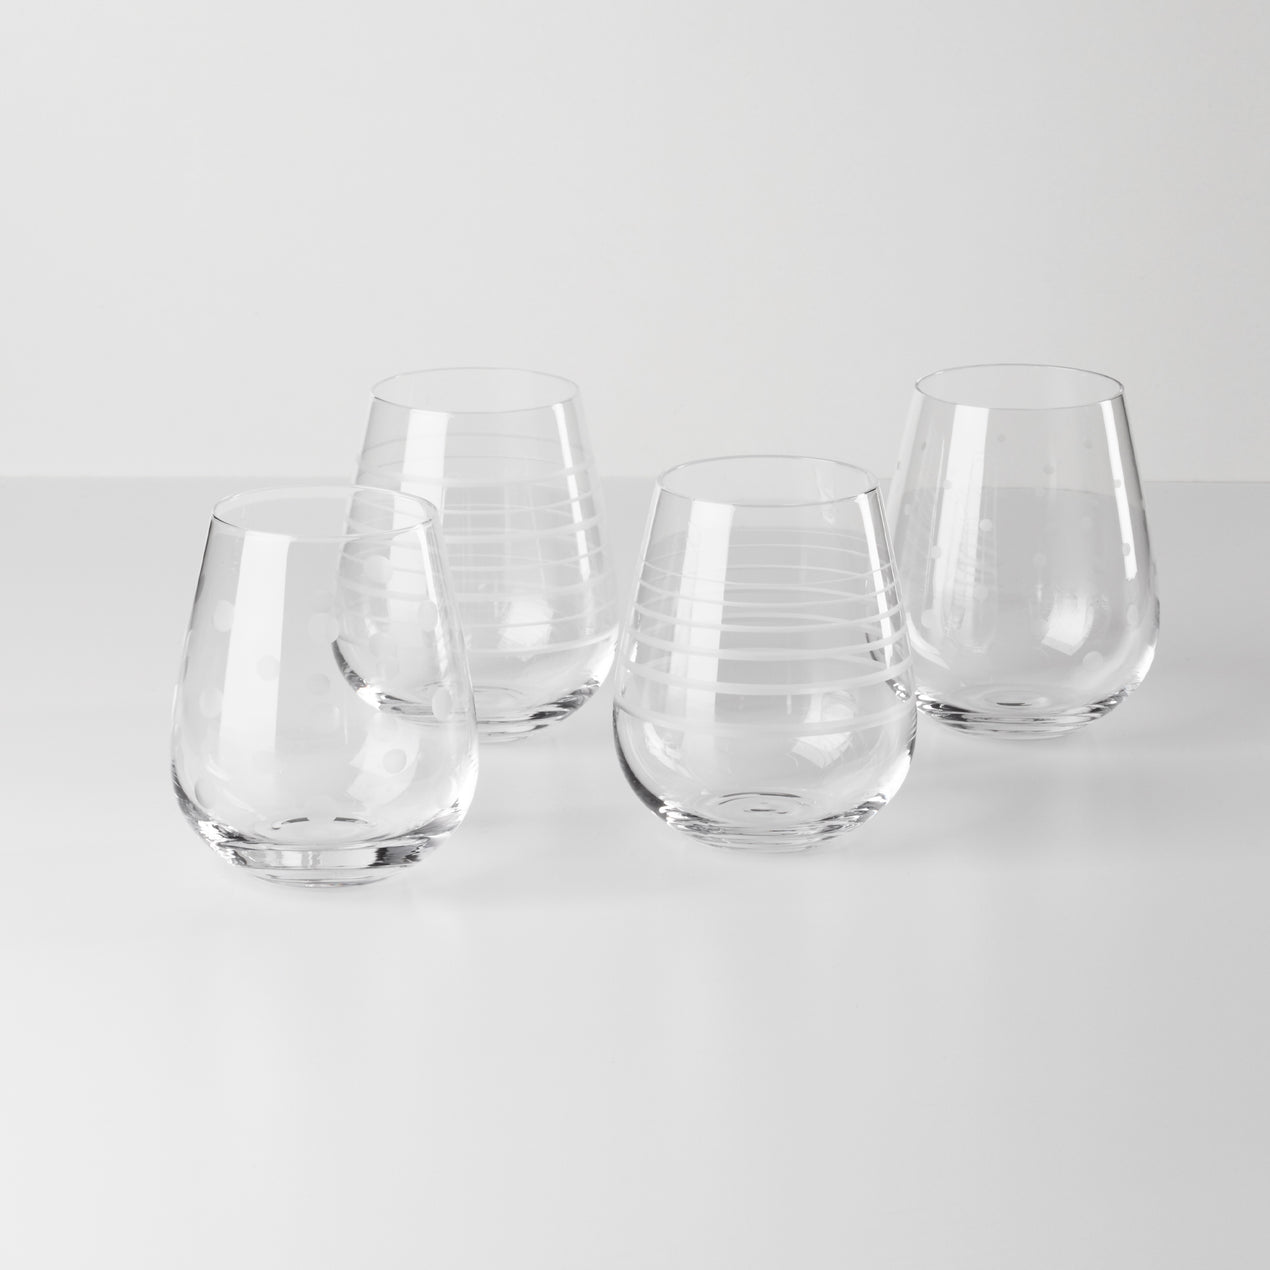 Stemless Wine Glasses, Set of 4